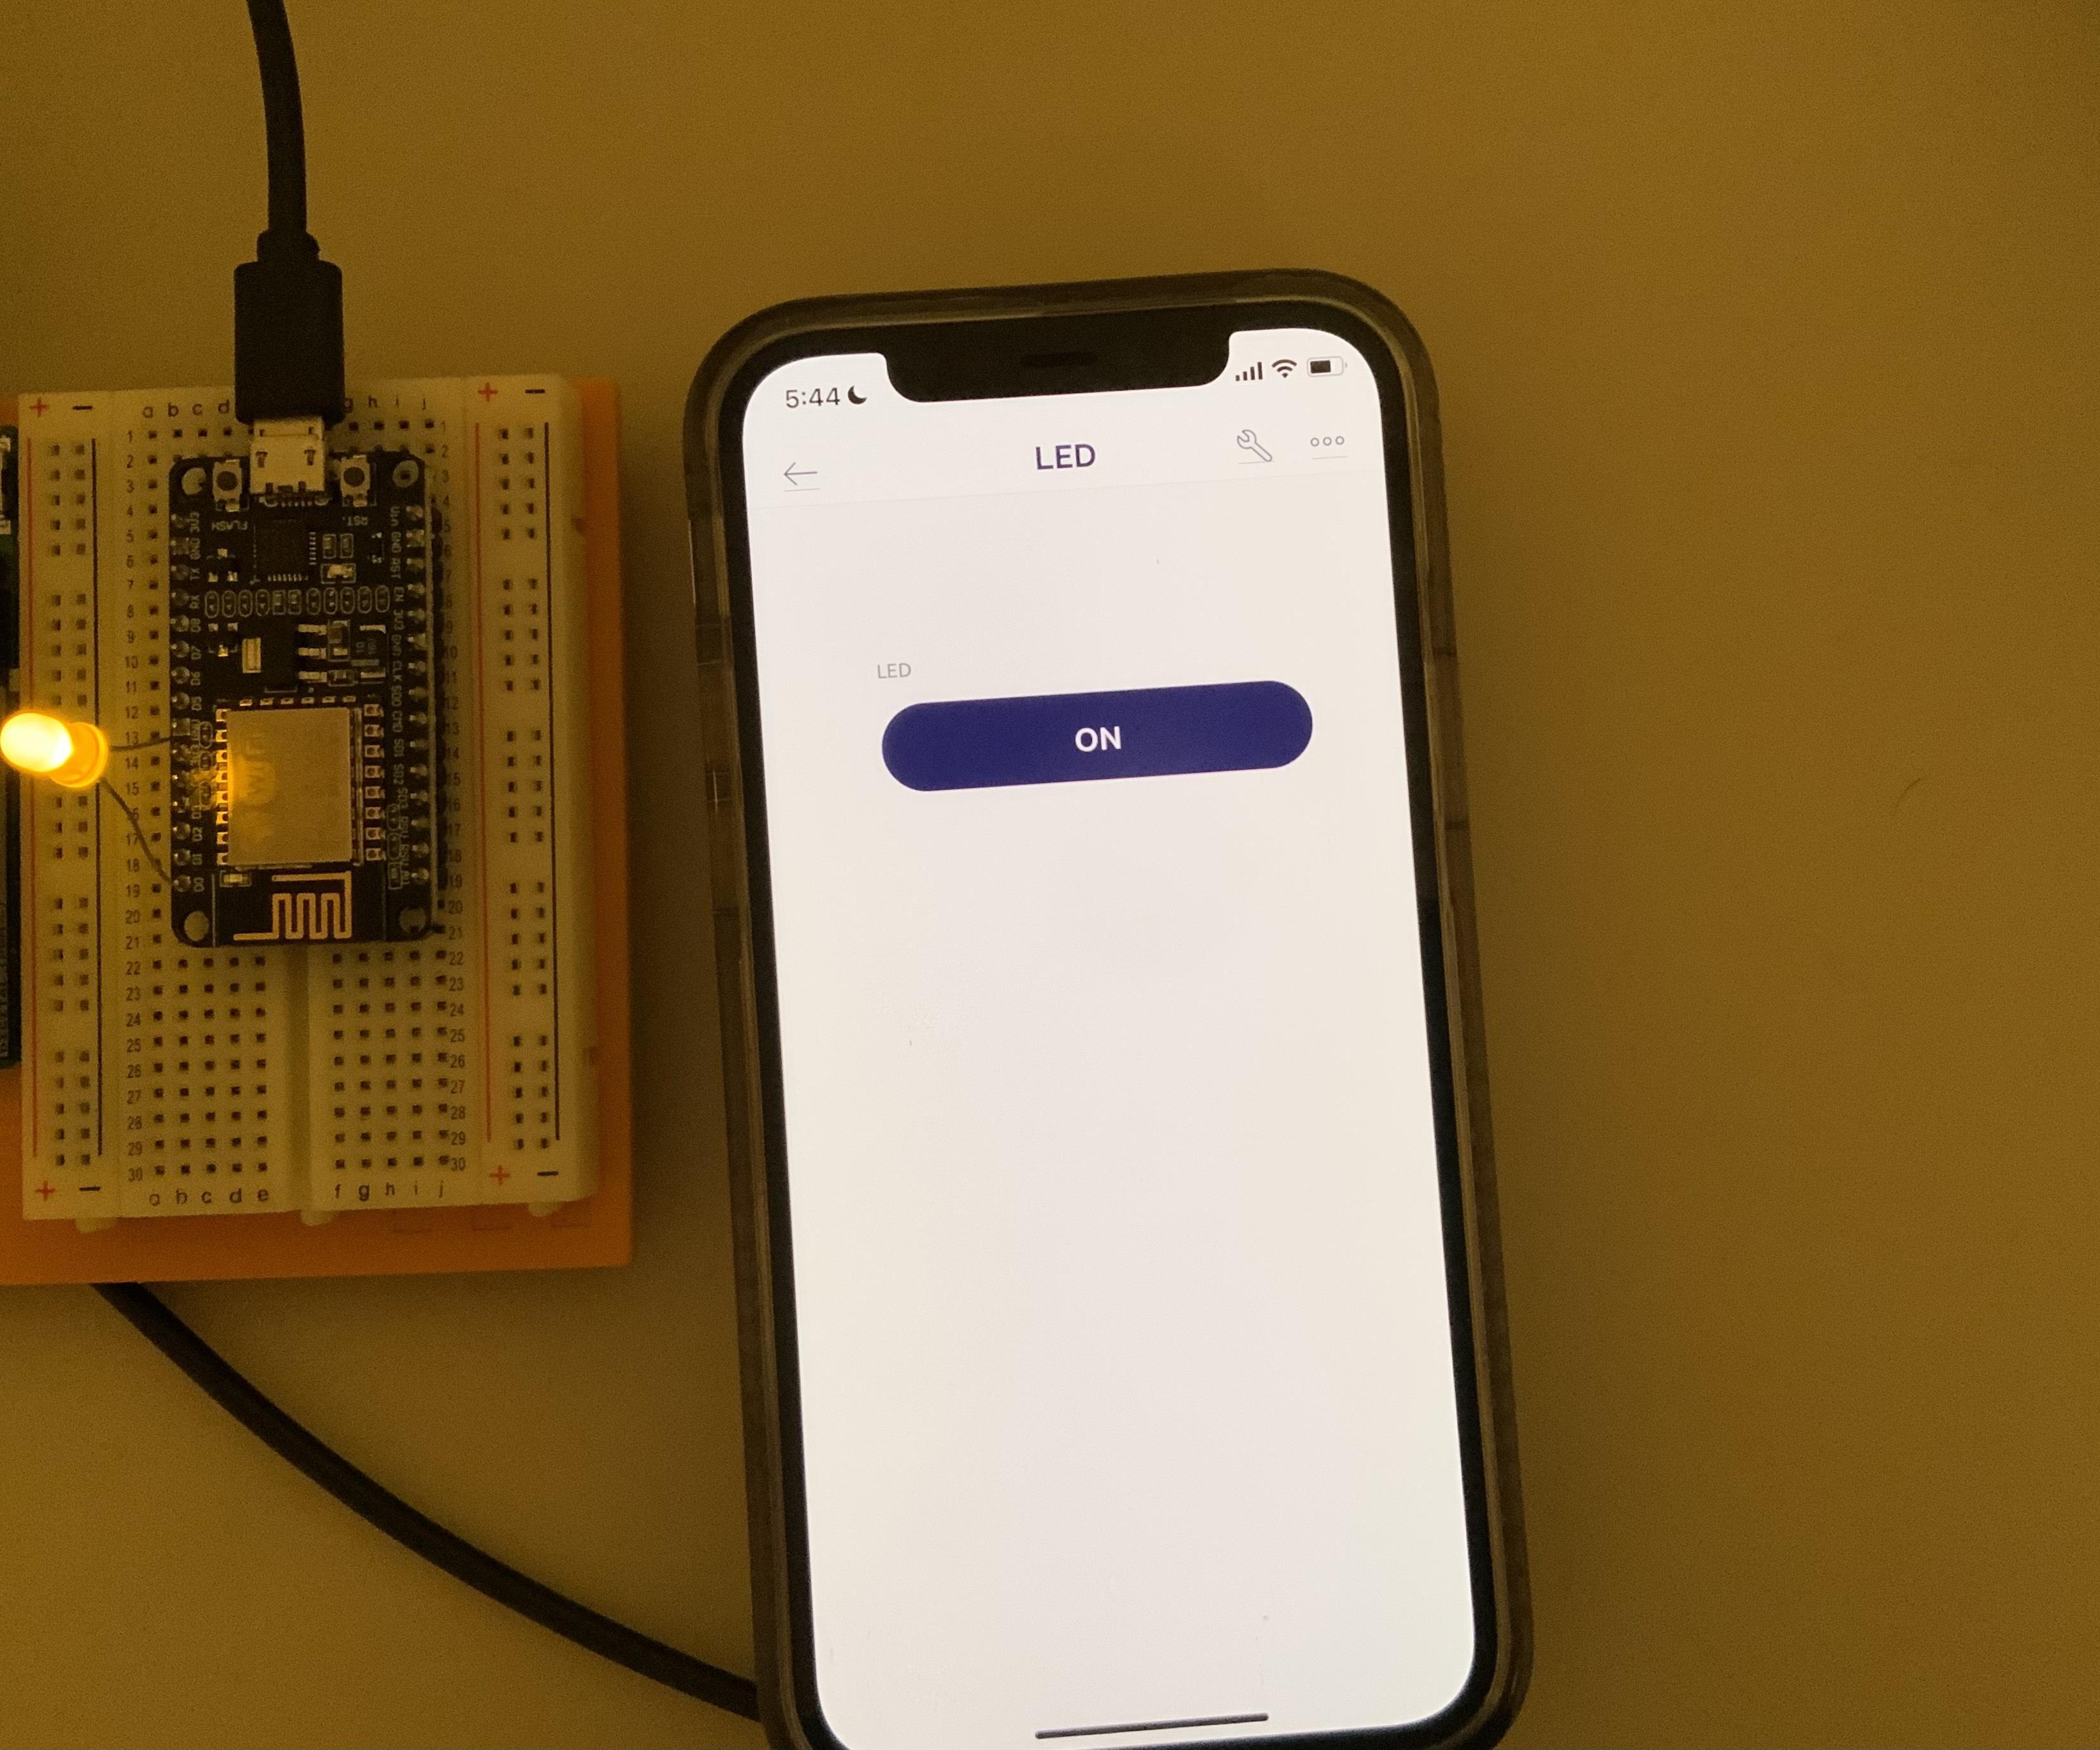 Beginner IoT Project (esp8266 + Blynk)